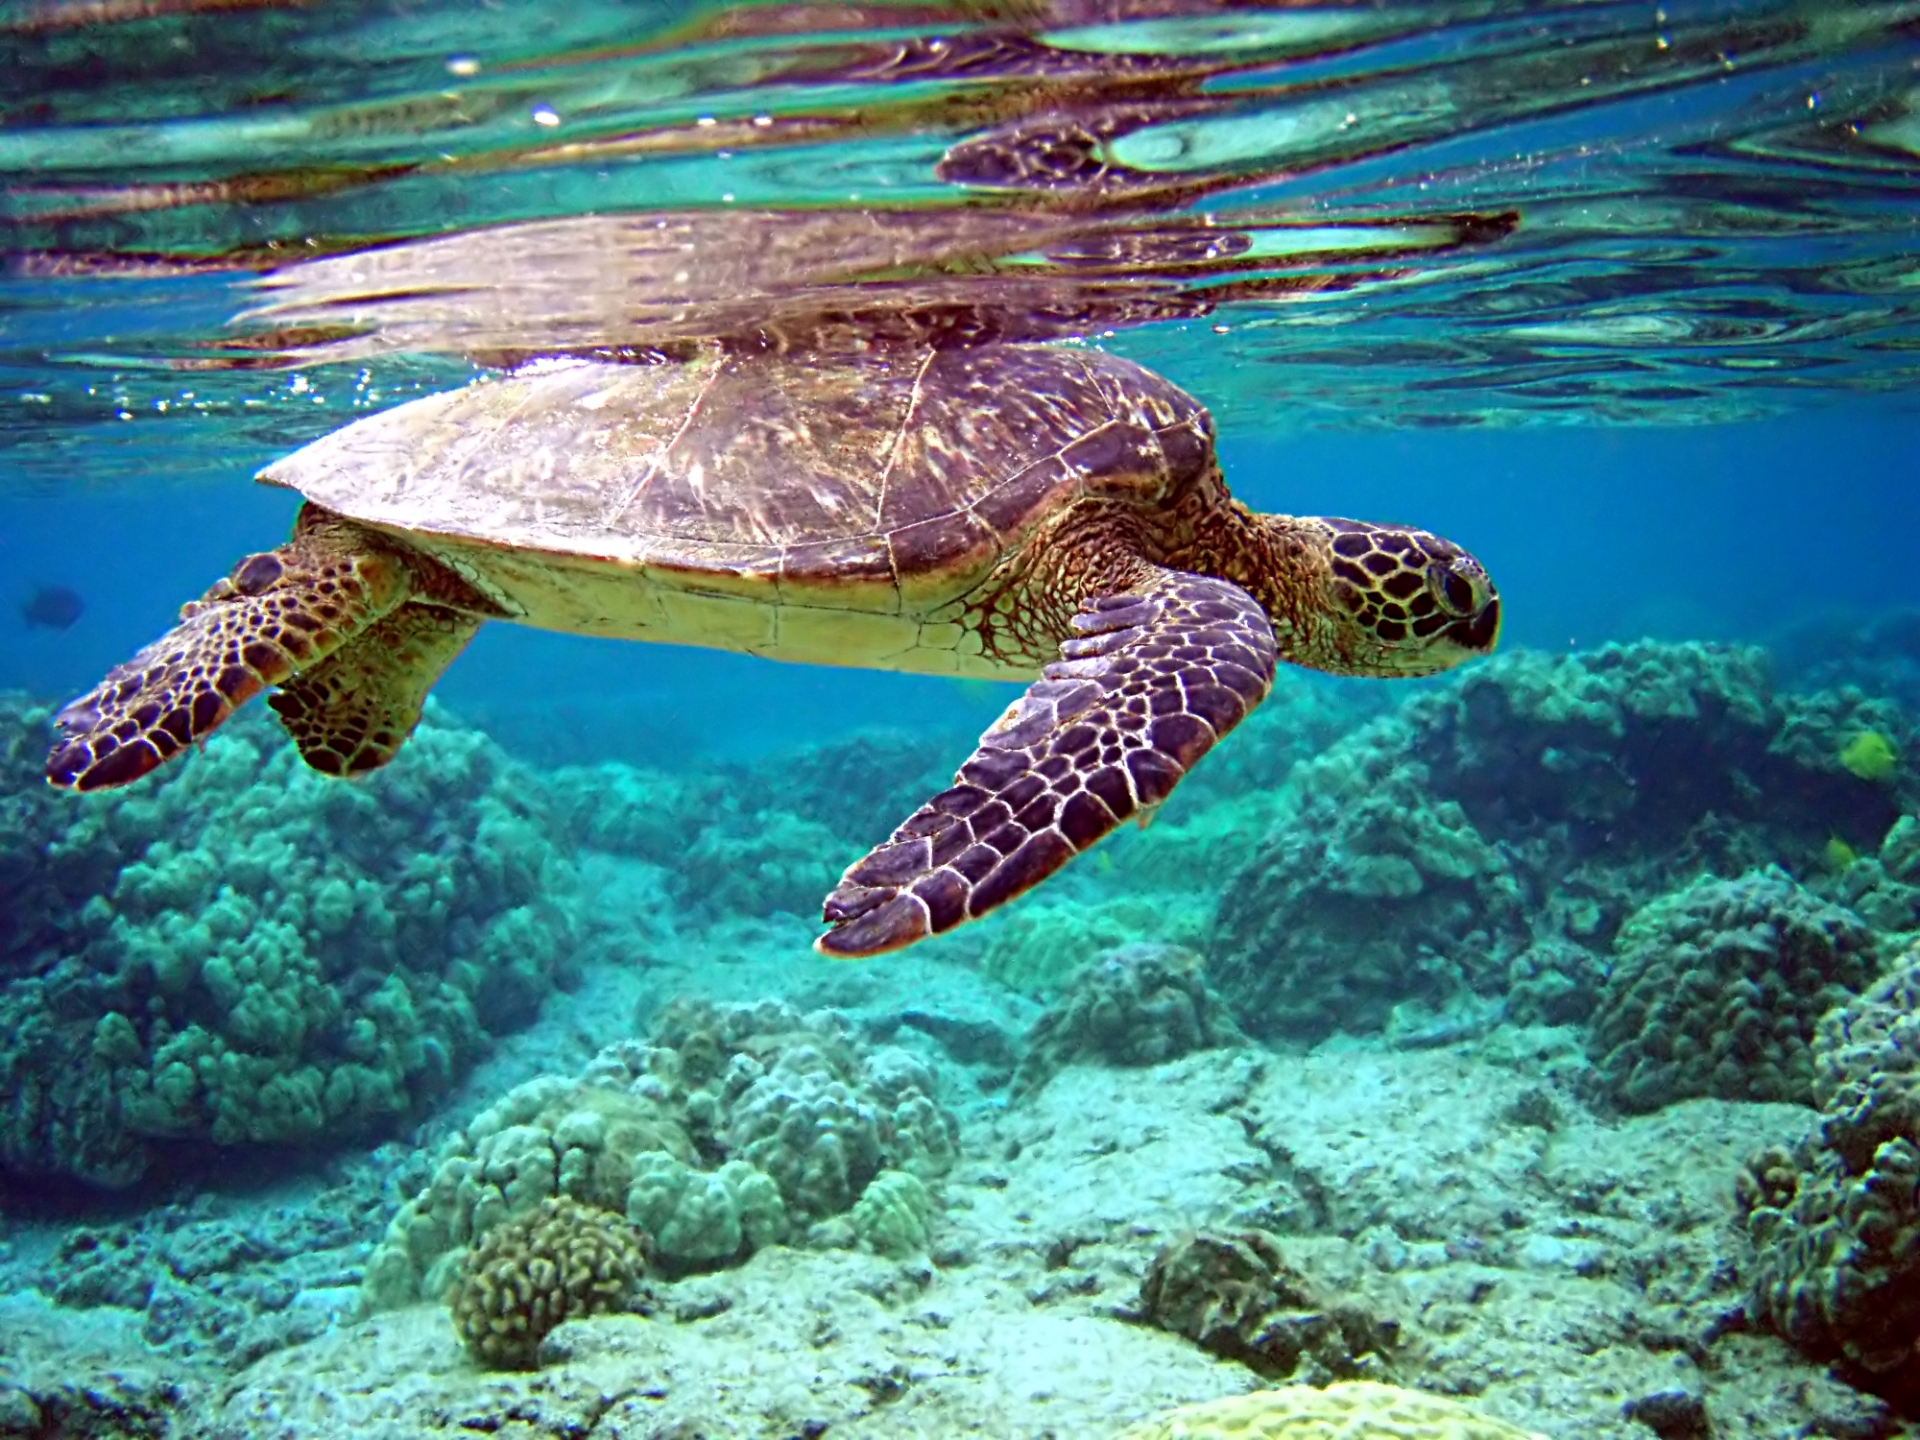 program on endangered turtle protection released